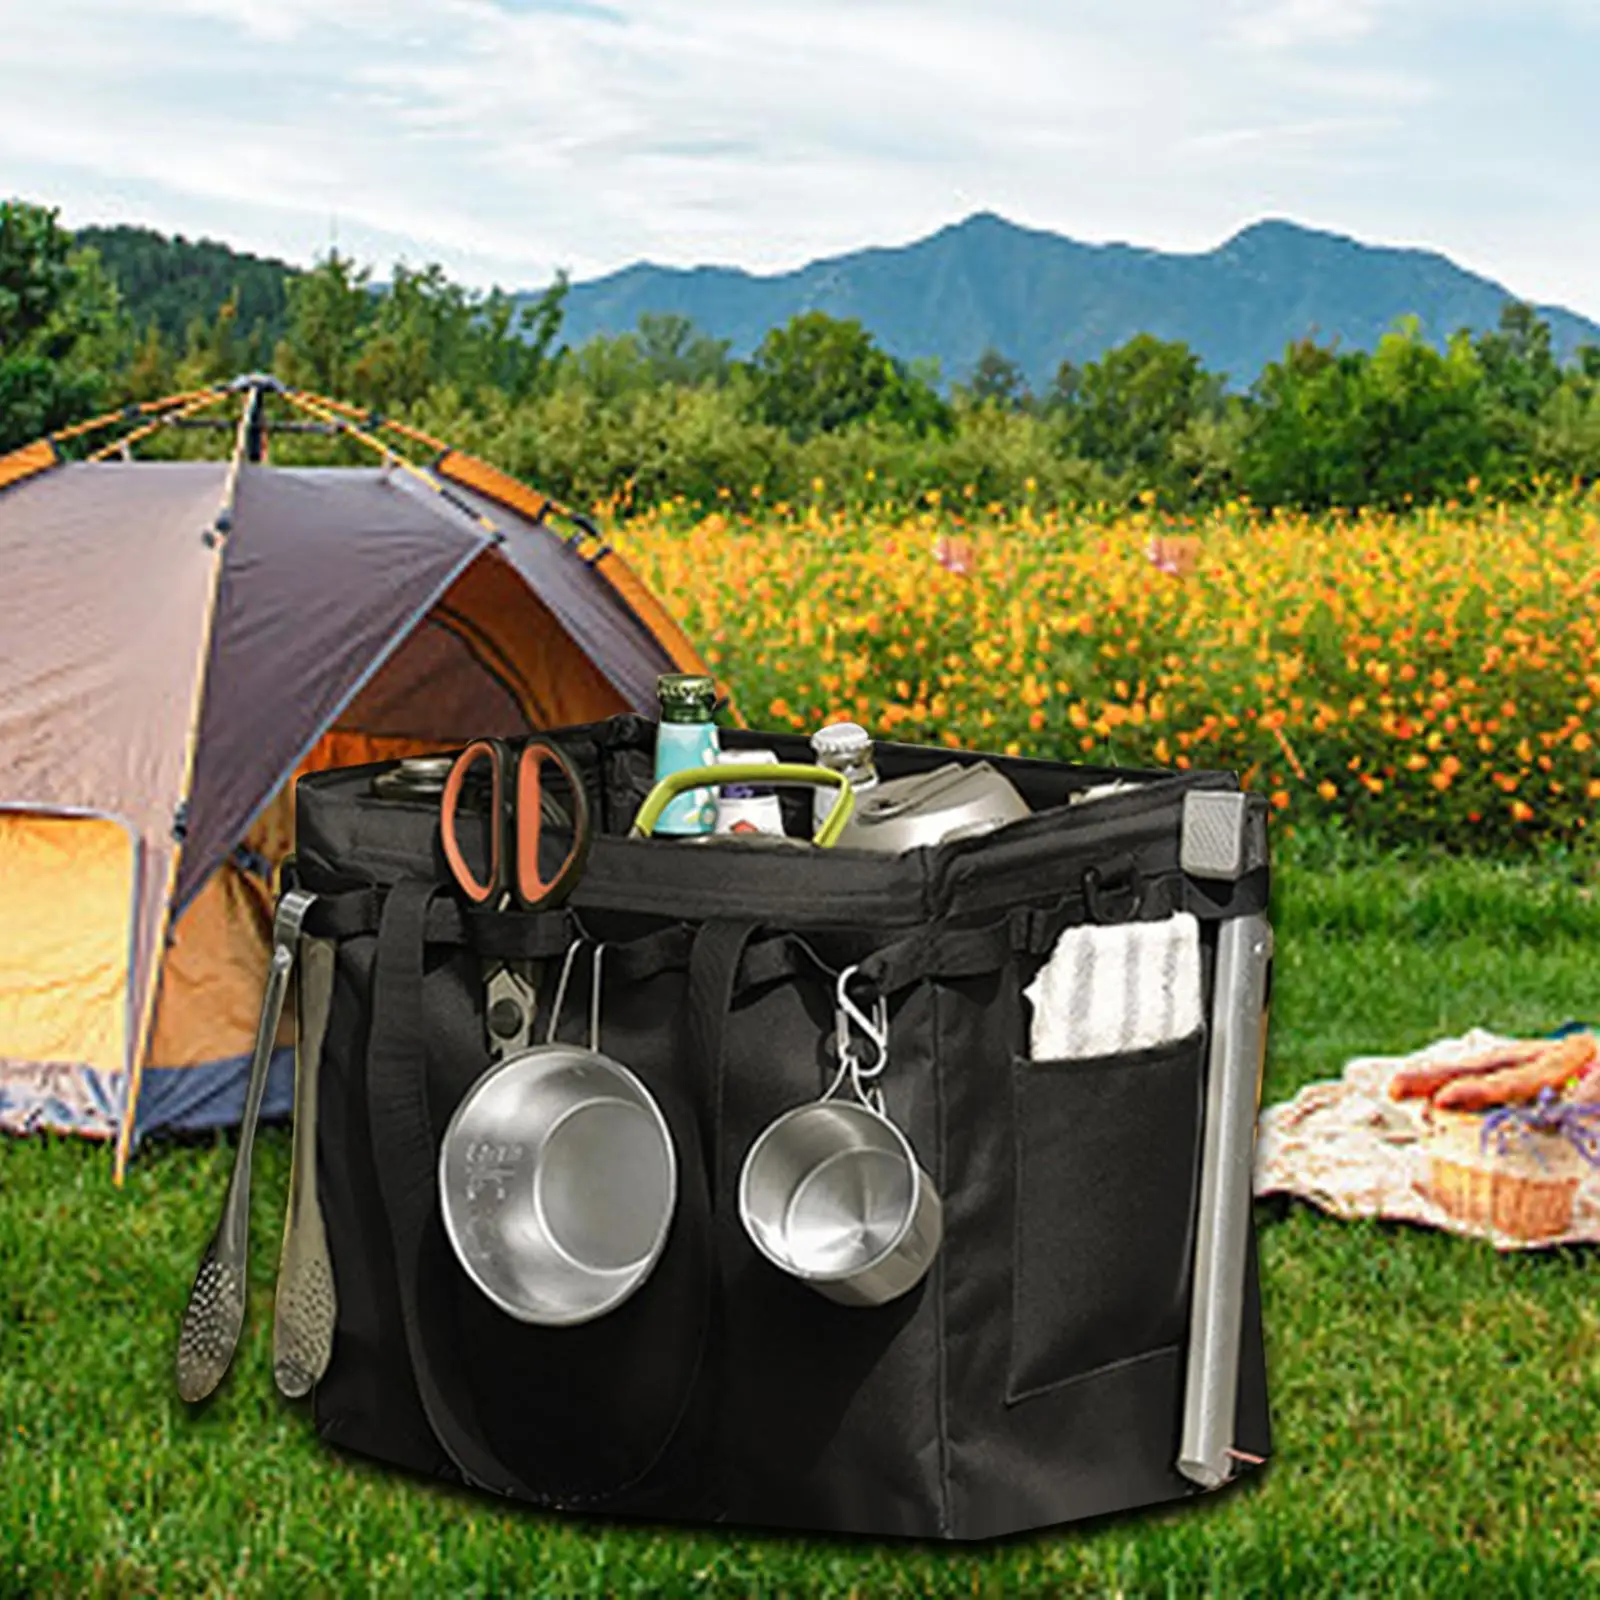 Outdoor Picnic Storage Bag Handbag Travel Garage Trunk Organizer for Barbecue Durable Black Large Capacity Portable Multipurpose